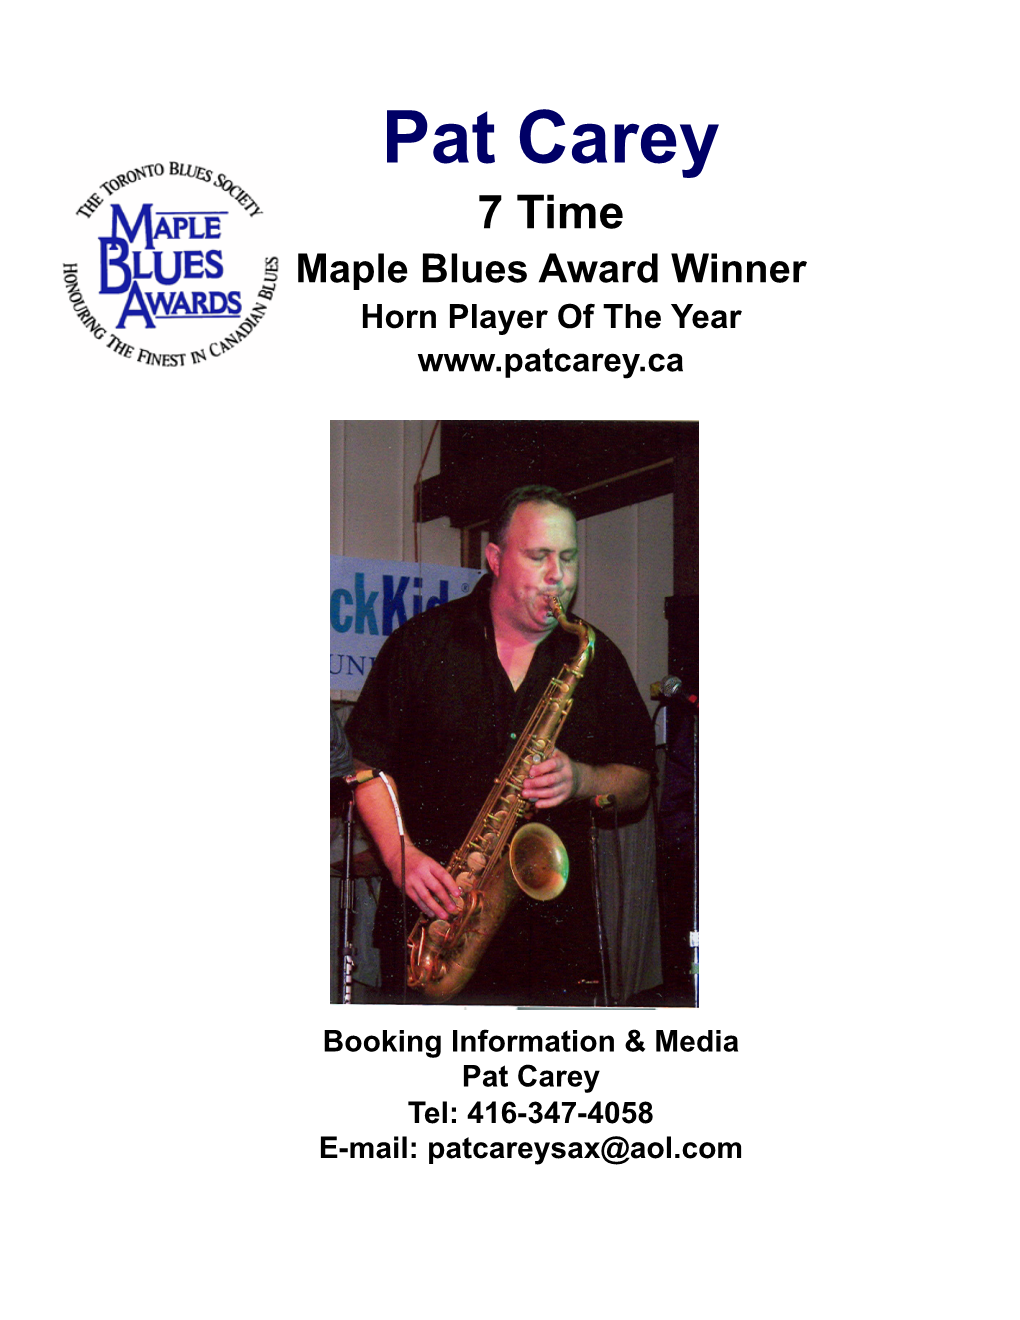 Maple Blues Award Winner Horn Player of the Year